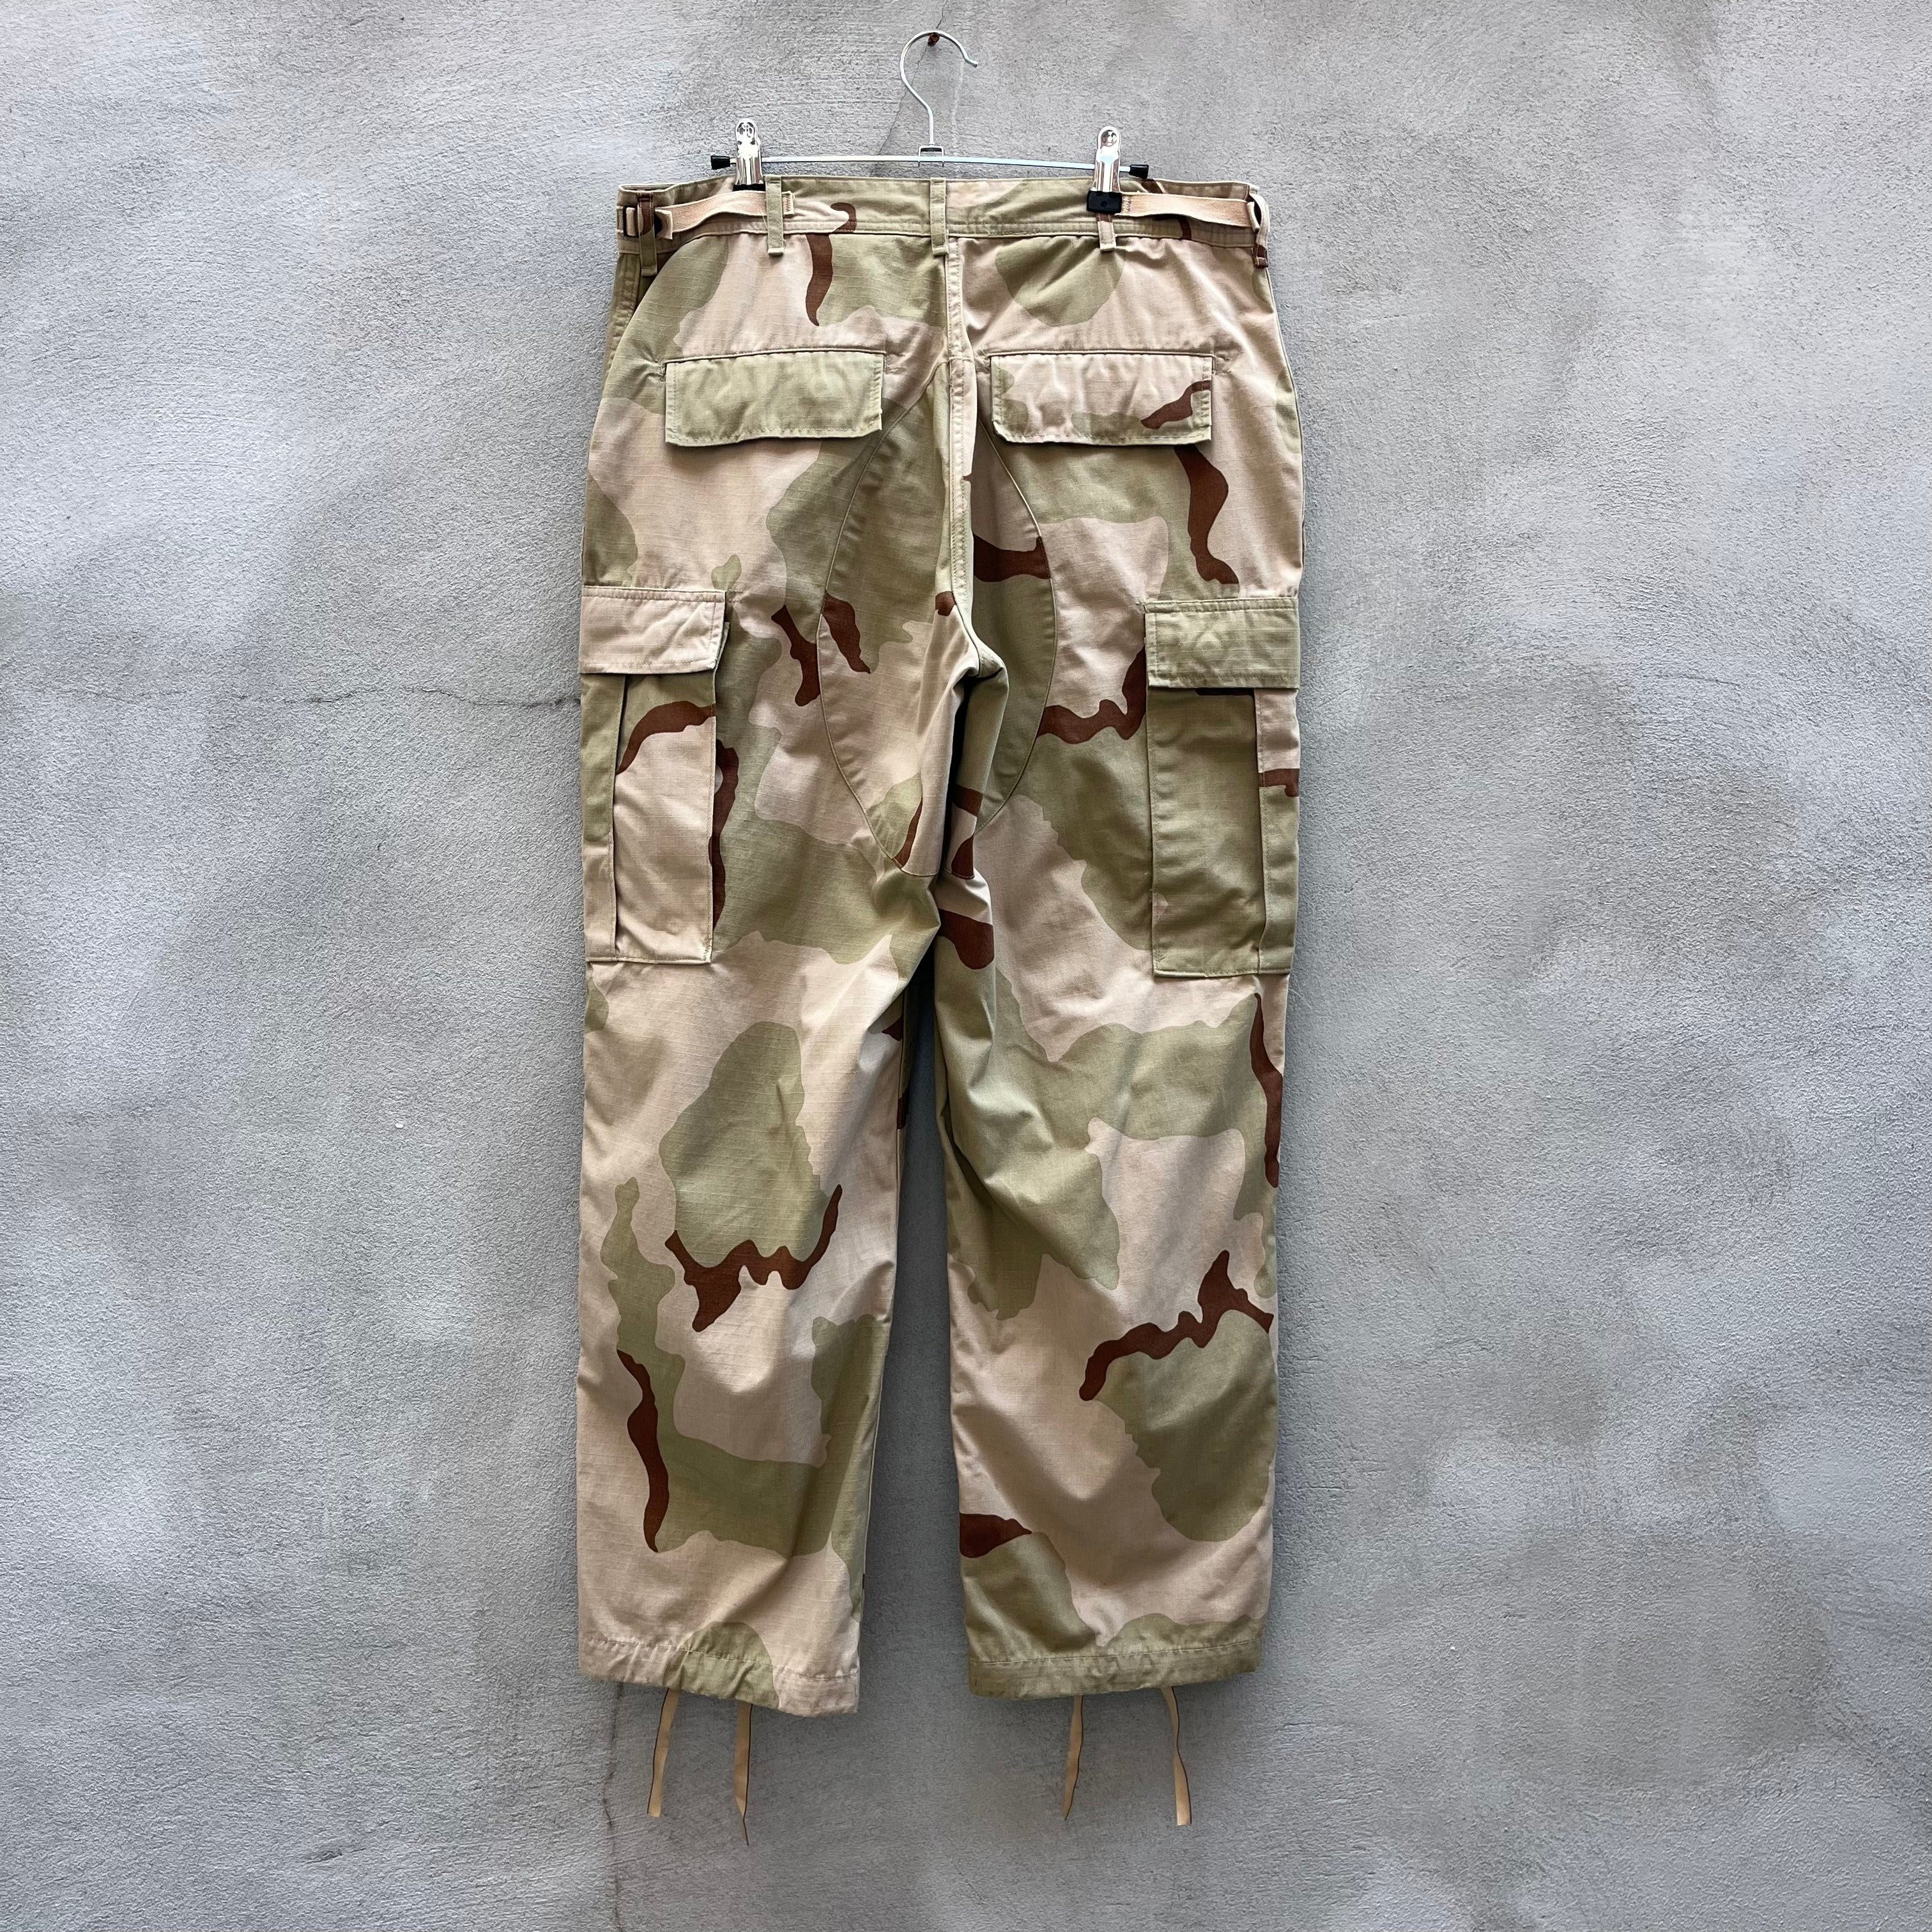 Vintage 97’ Military Desert Camo Cargo Pants Size US 34 / EU 50 - 2 Preview